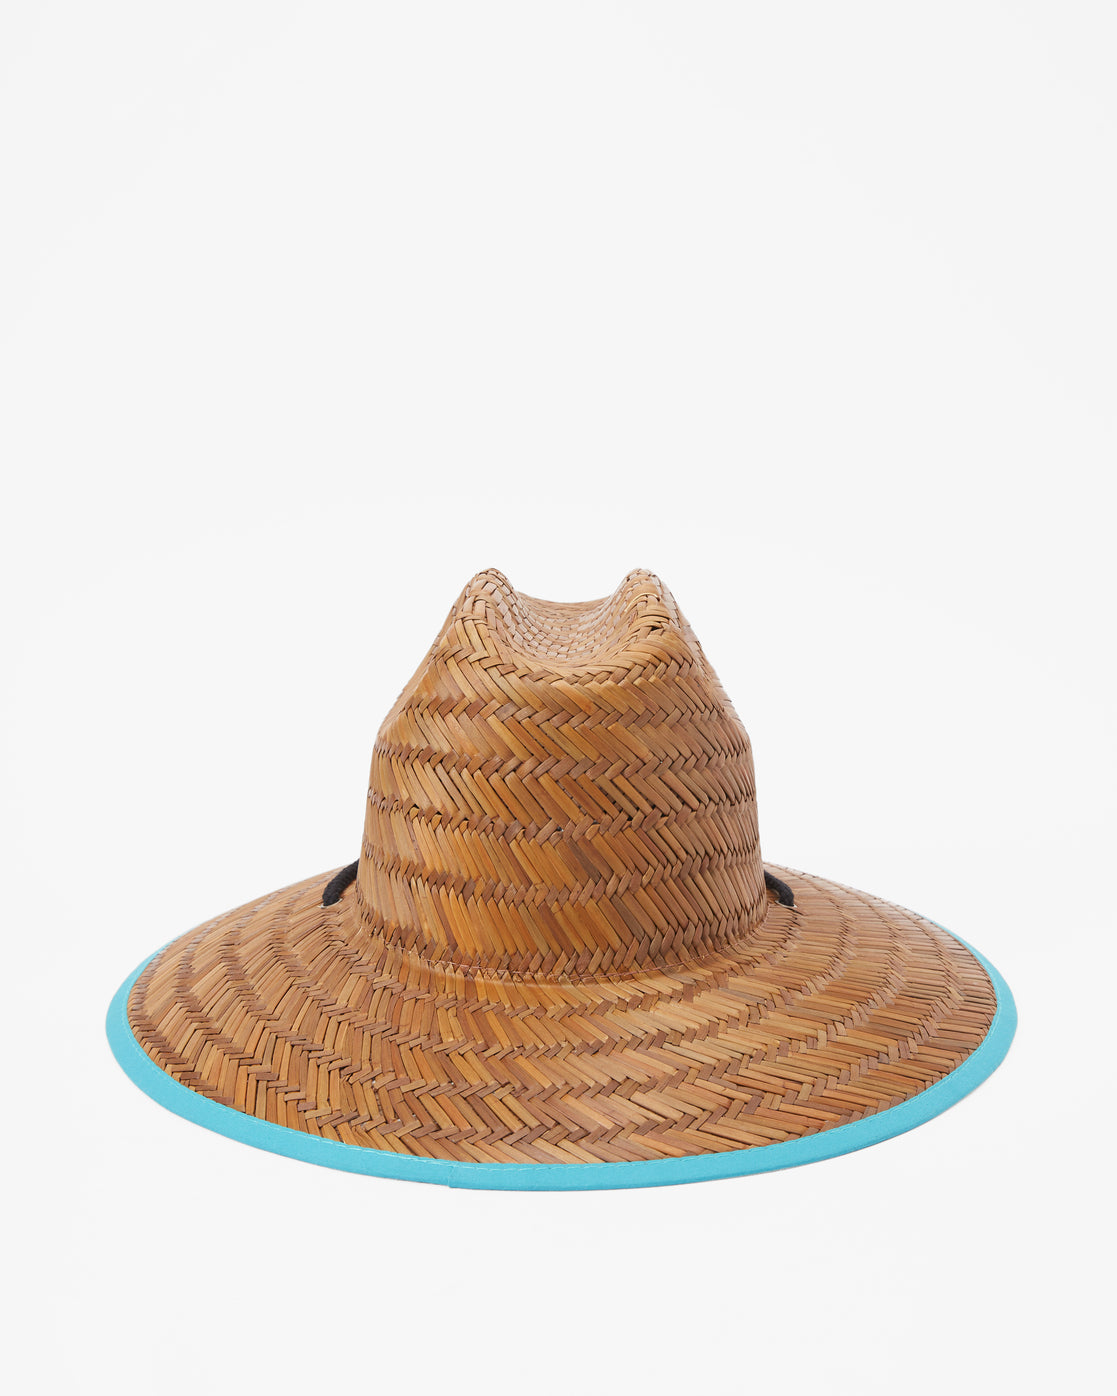 Tides Print Straw Lifeguard Hat - ABYHA00216